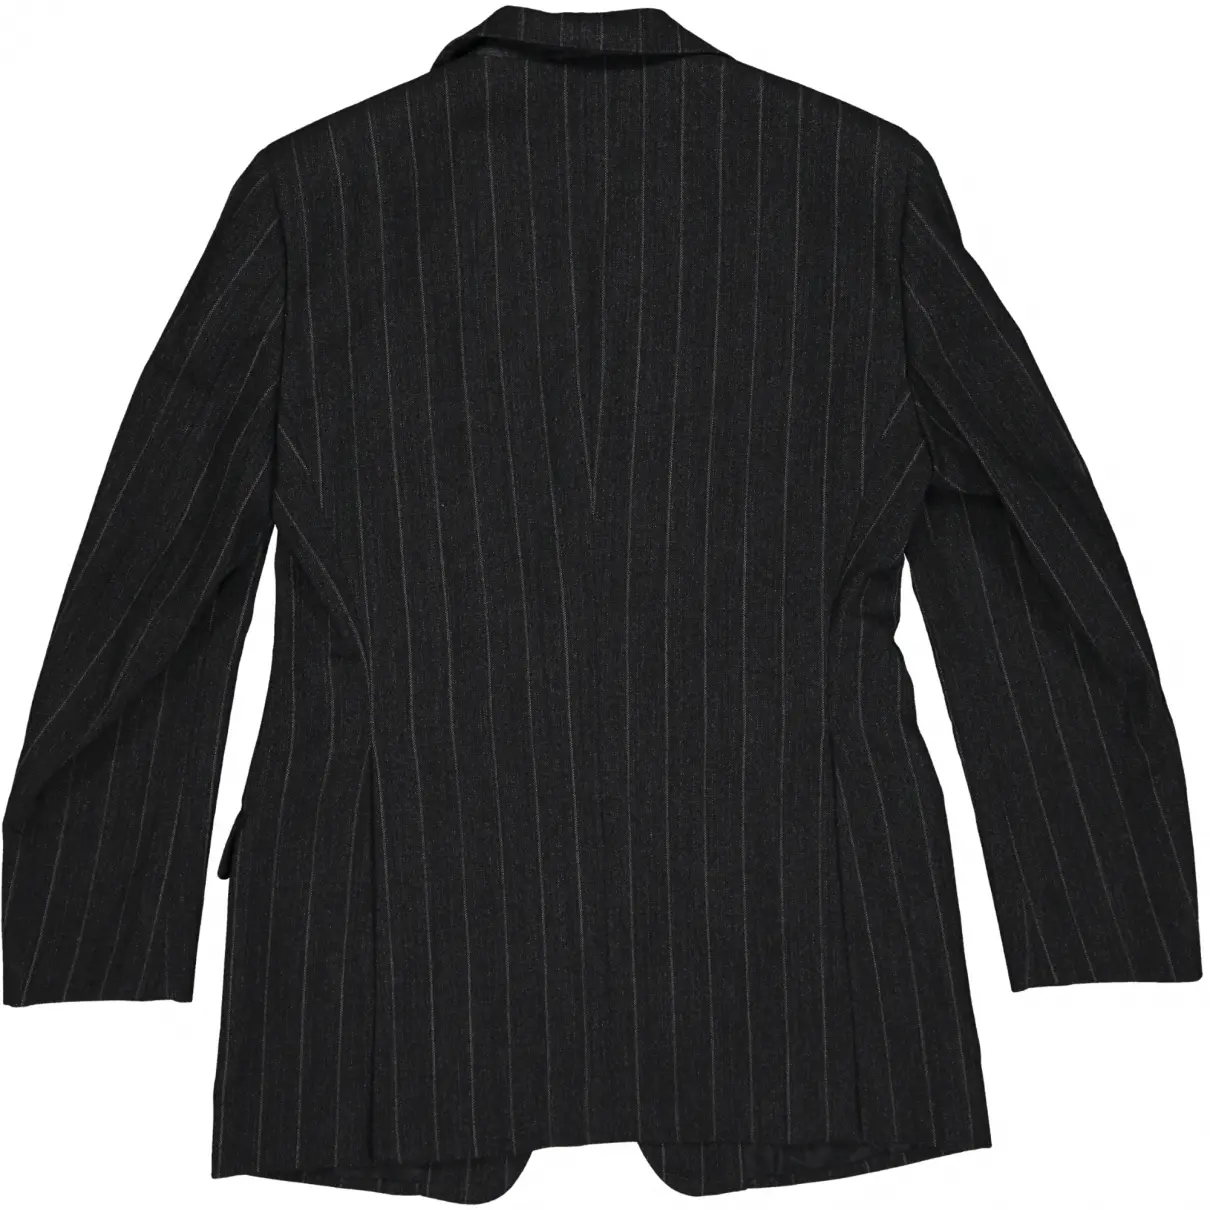 Buy Giorgio Armani Wool suit online - Vintage